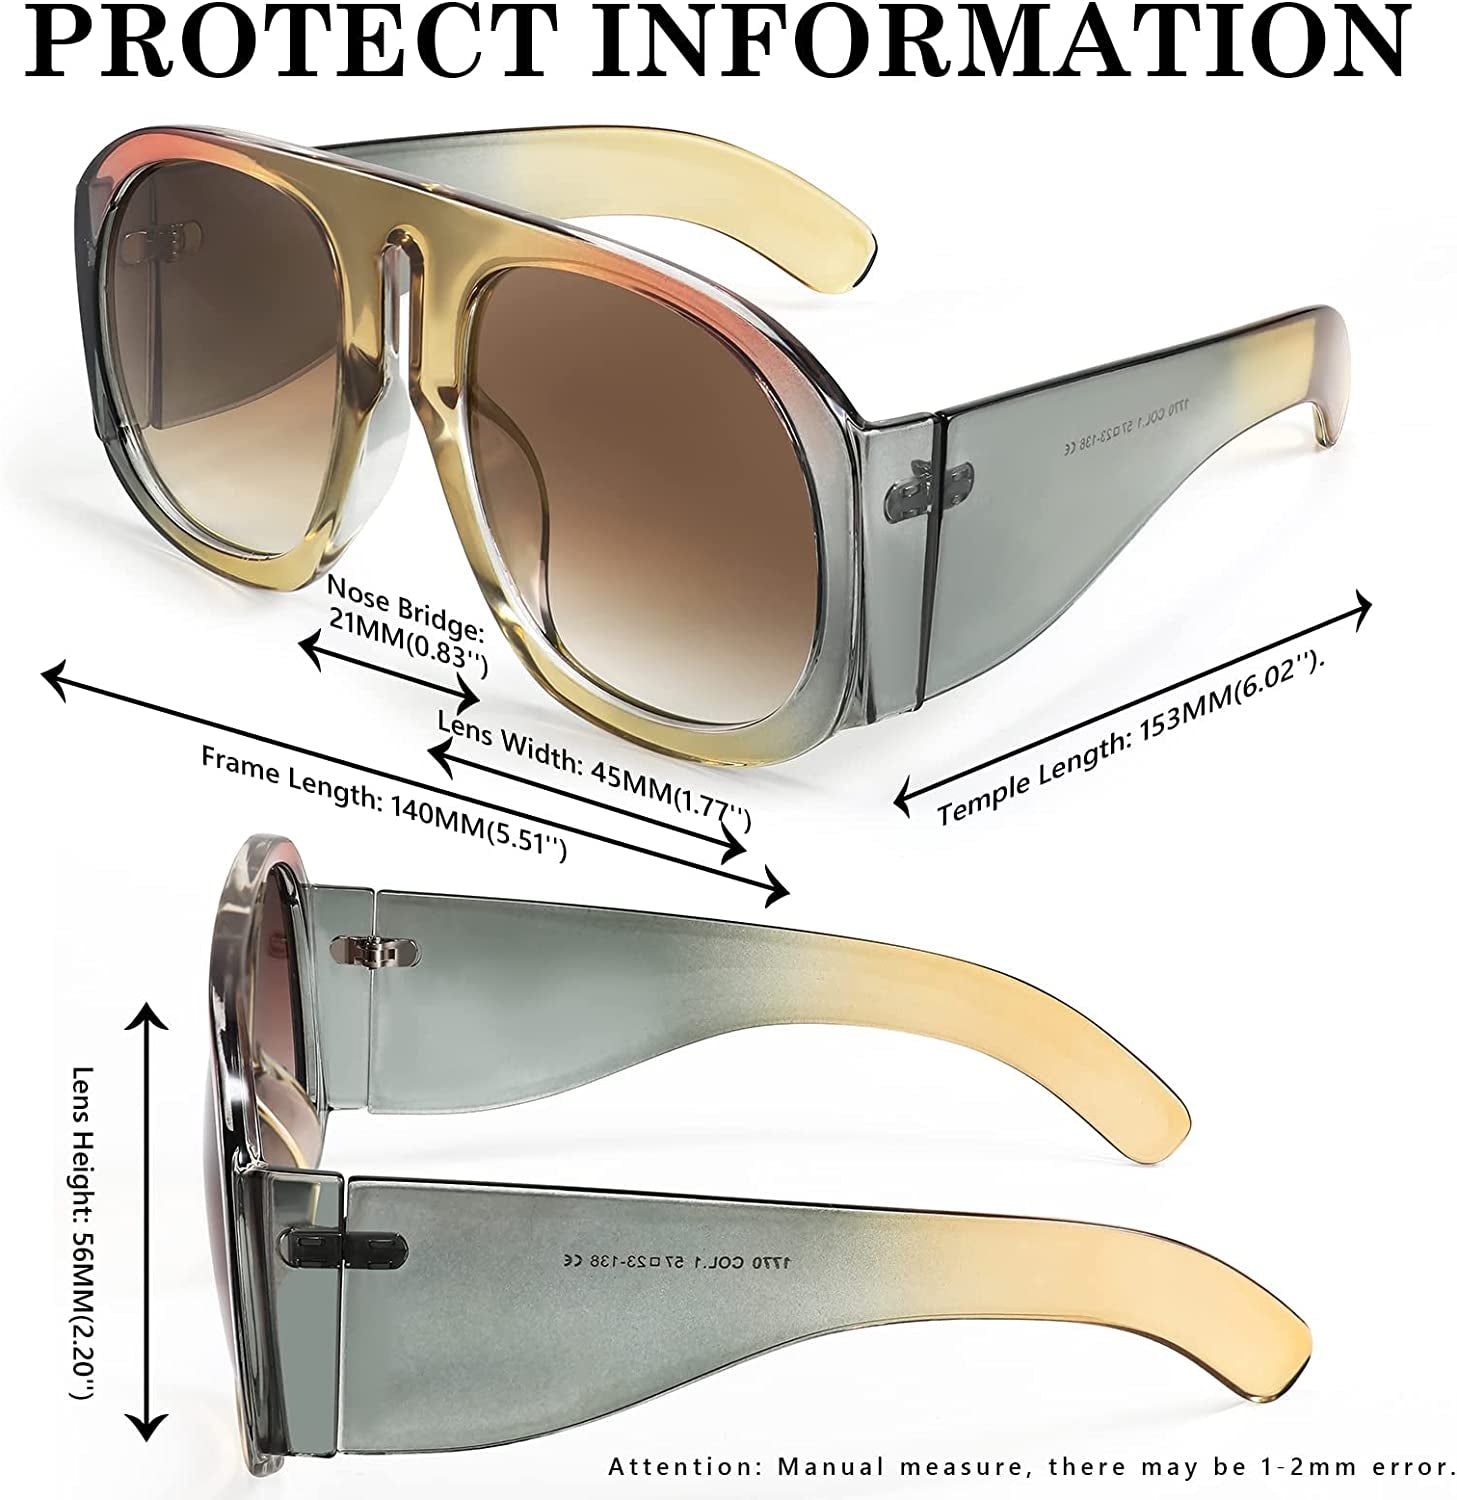 Oversized Square Sunglasses Women Men round Shield Sunglasses Vintage Plastic Thick Frame Shades B2745